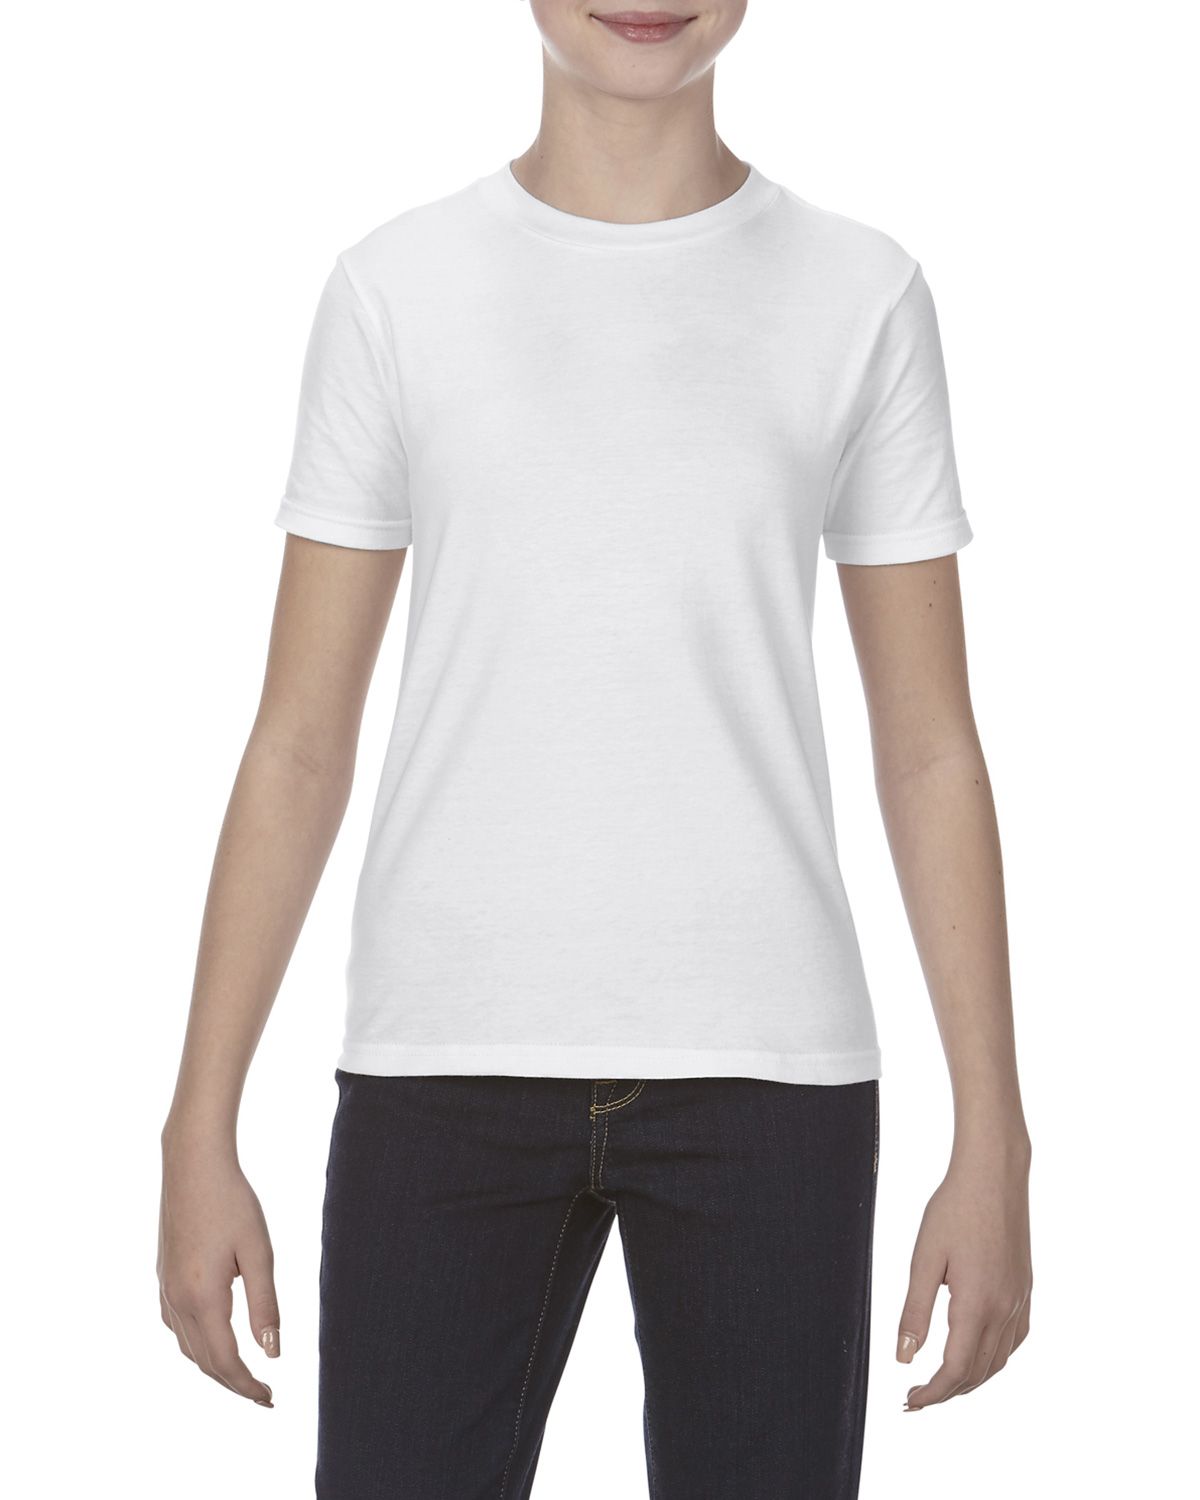 Alstyle AL5081 Youth 4.3 oz. Ringspun Cotton T-Shirt